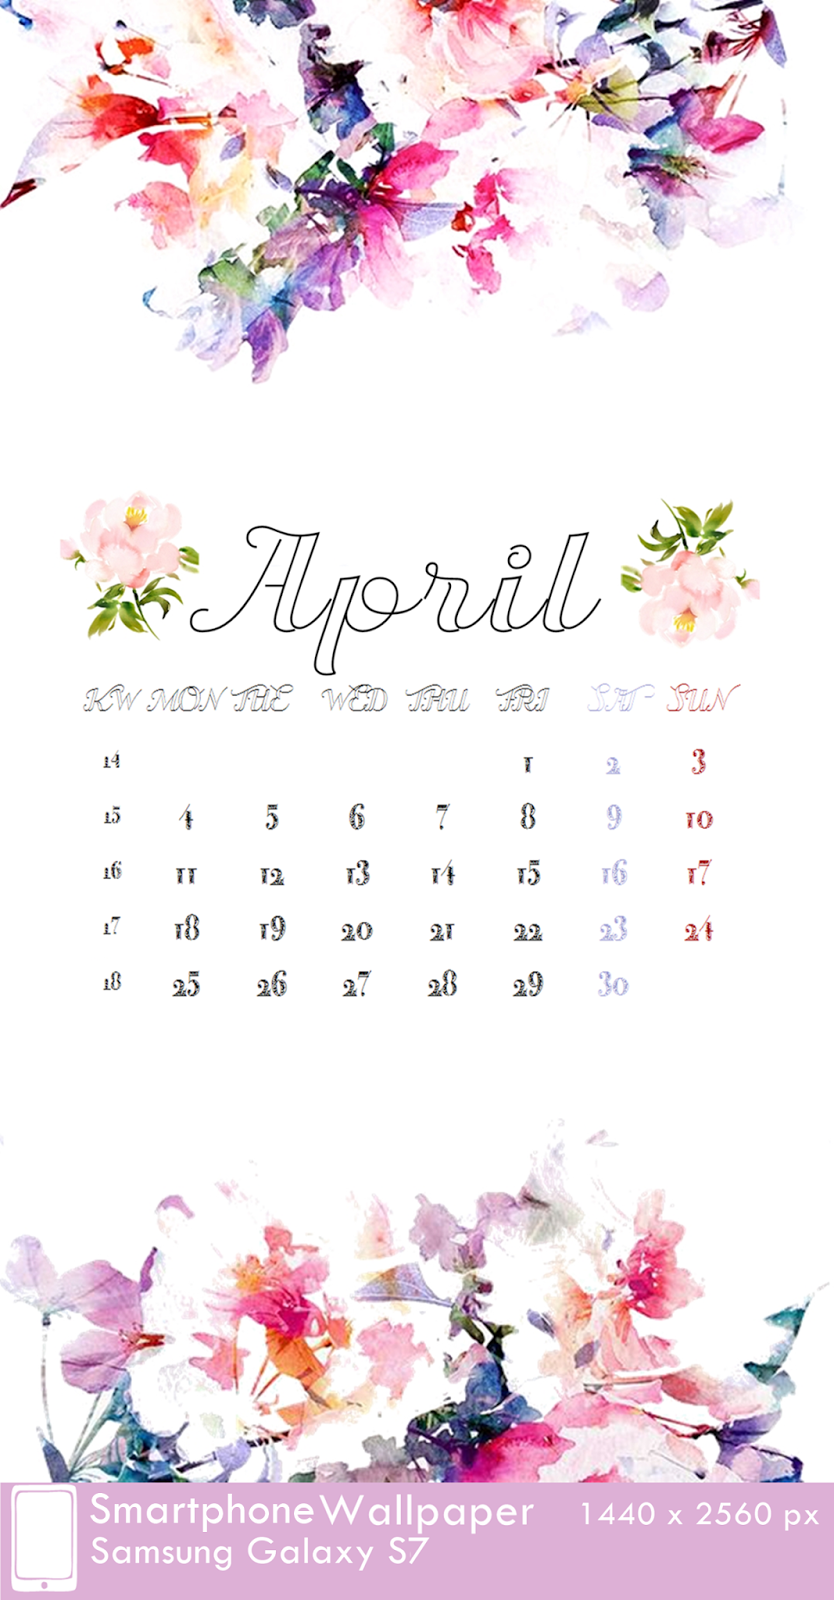 Samsung Galaxy S7 Wallpaper Calendar April 2016 fest 1440 x 2560 px